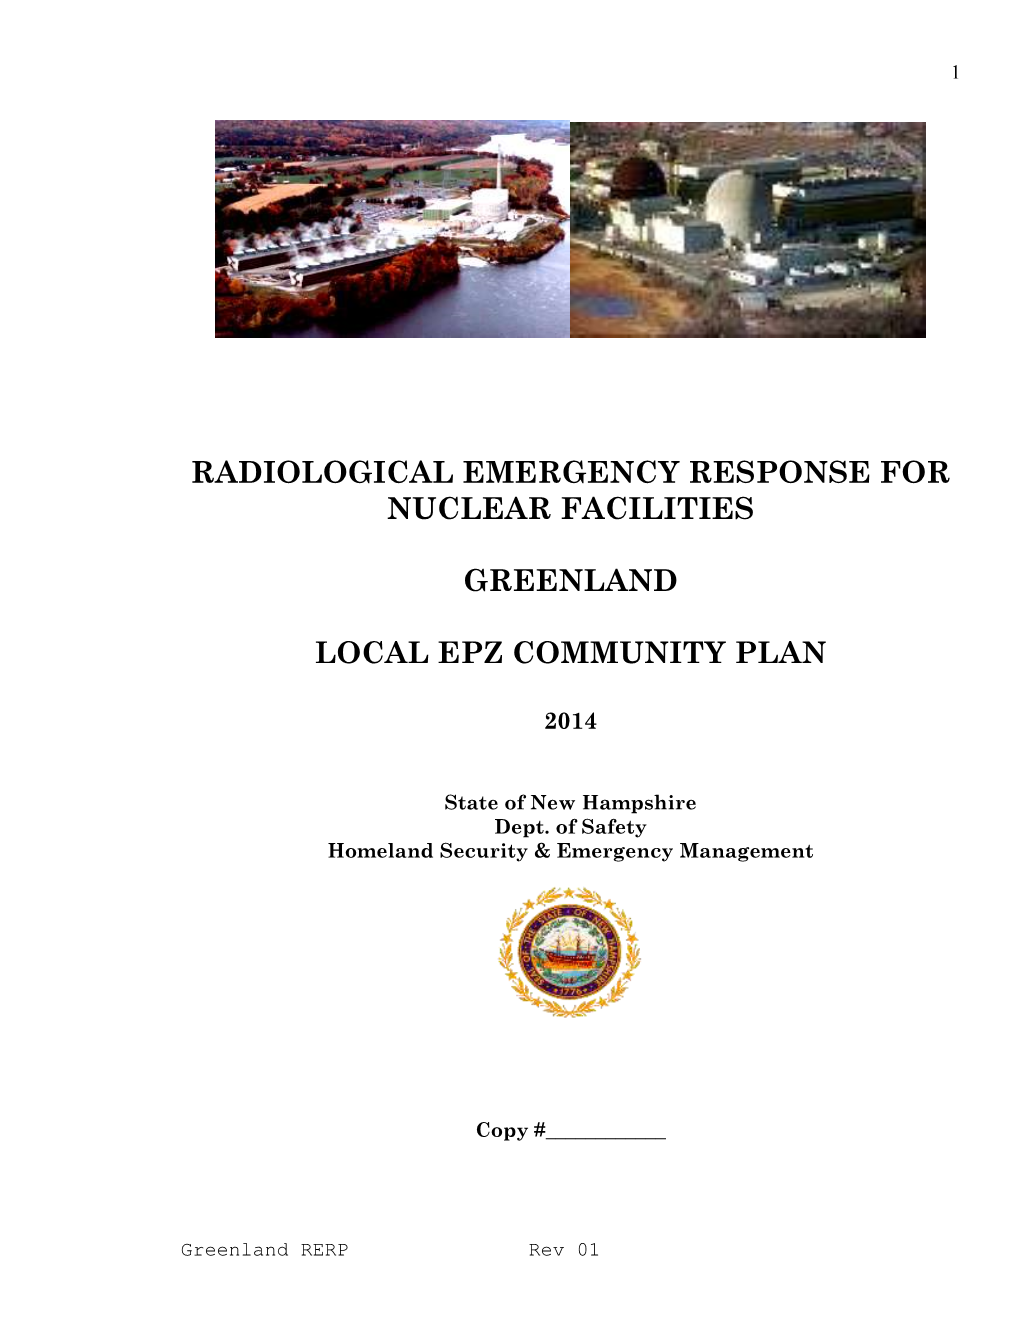 Radiological Emergency Response Plan